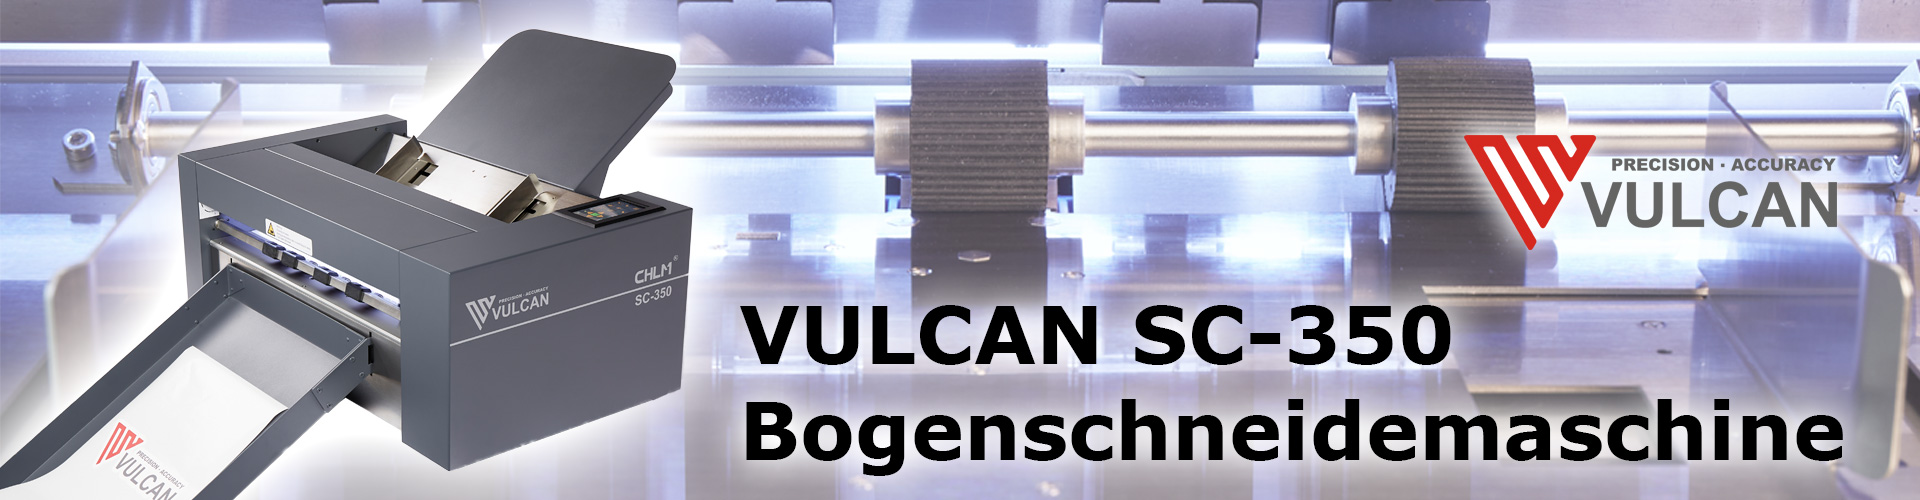 vulcan sc350 1920x500